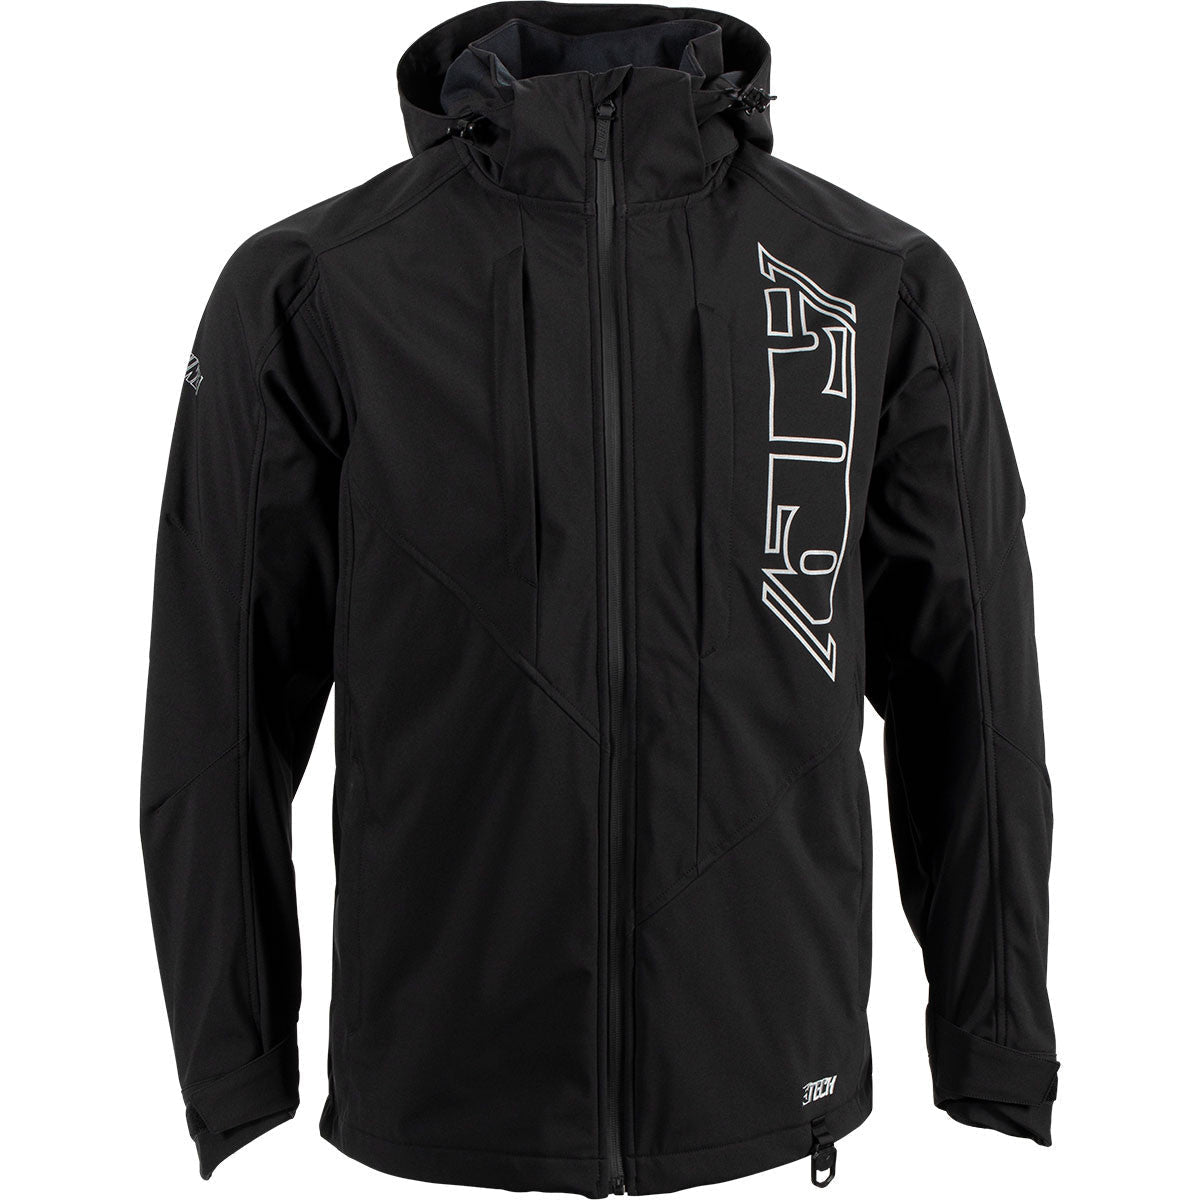 509 Tactical Elite Softshell Jacket in black ops